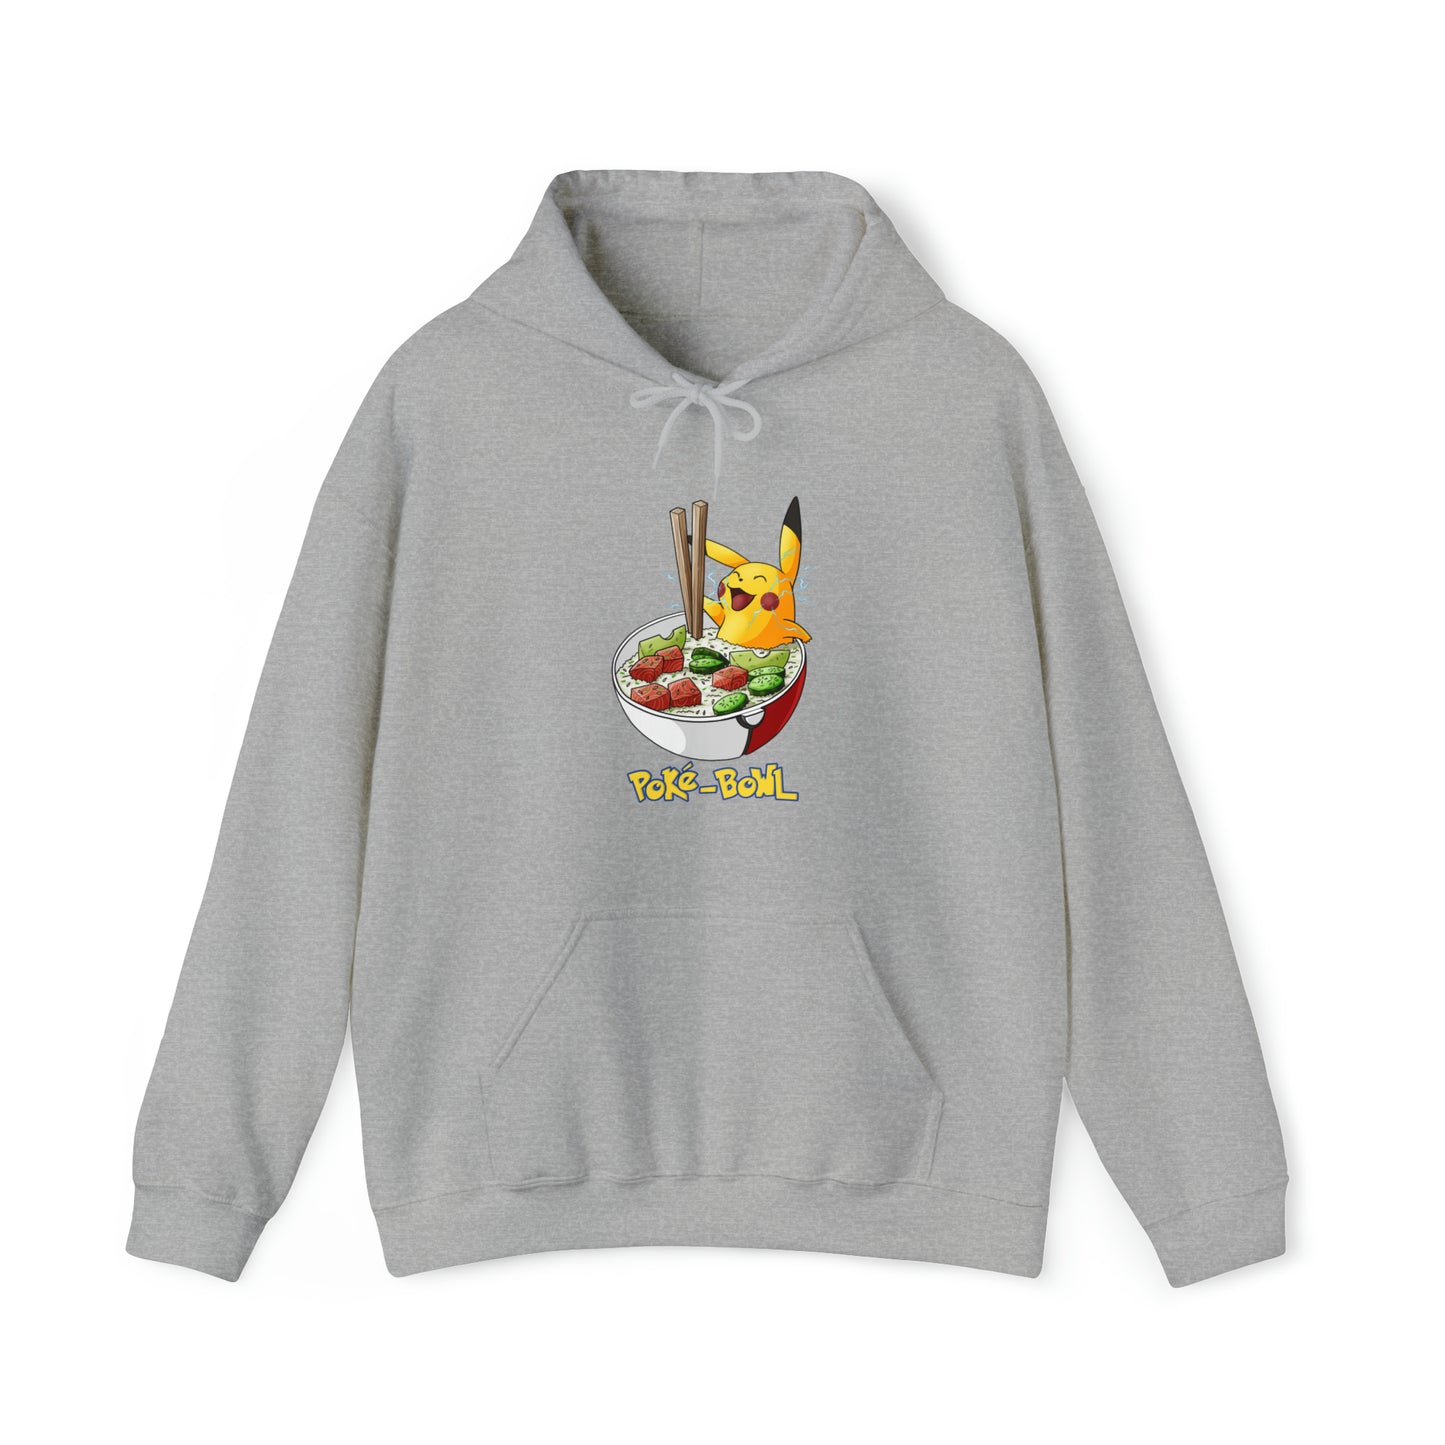 Custom Parody Hooded Sweatshirt, Poke-bowl design